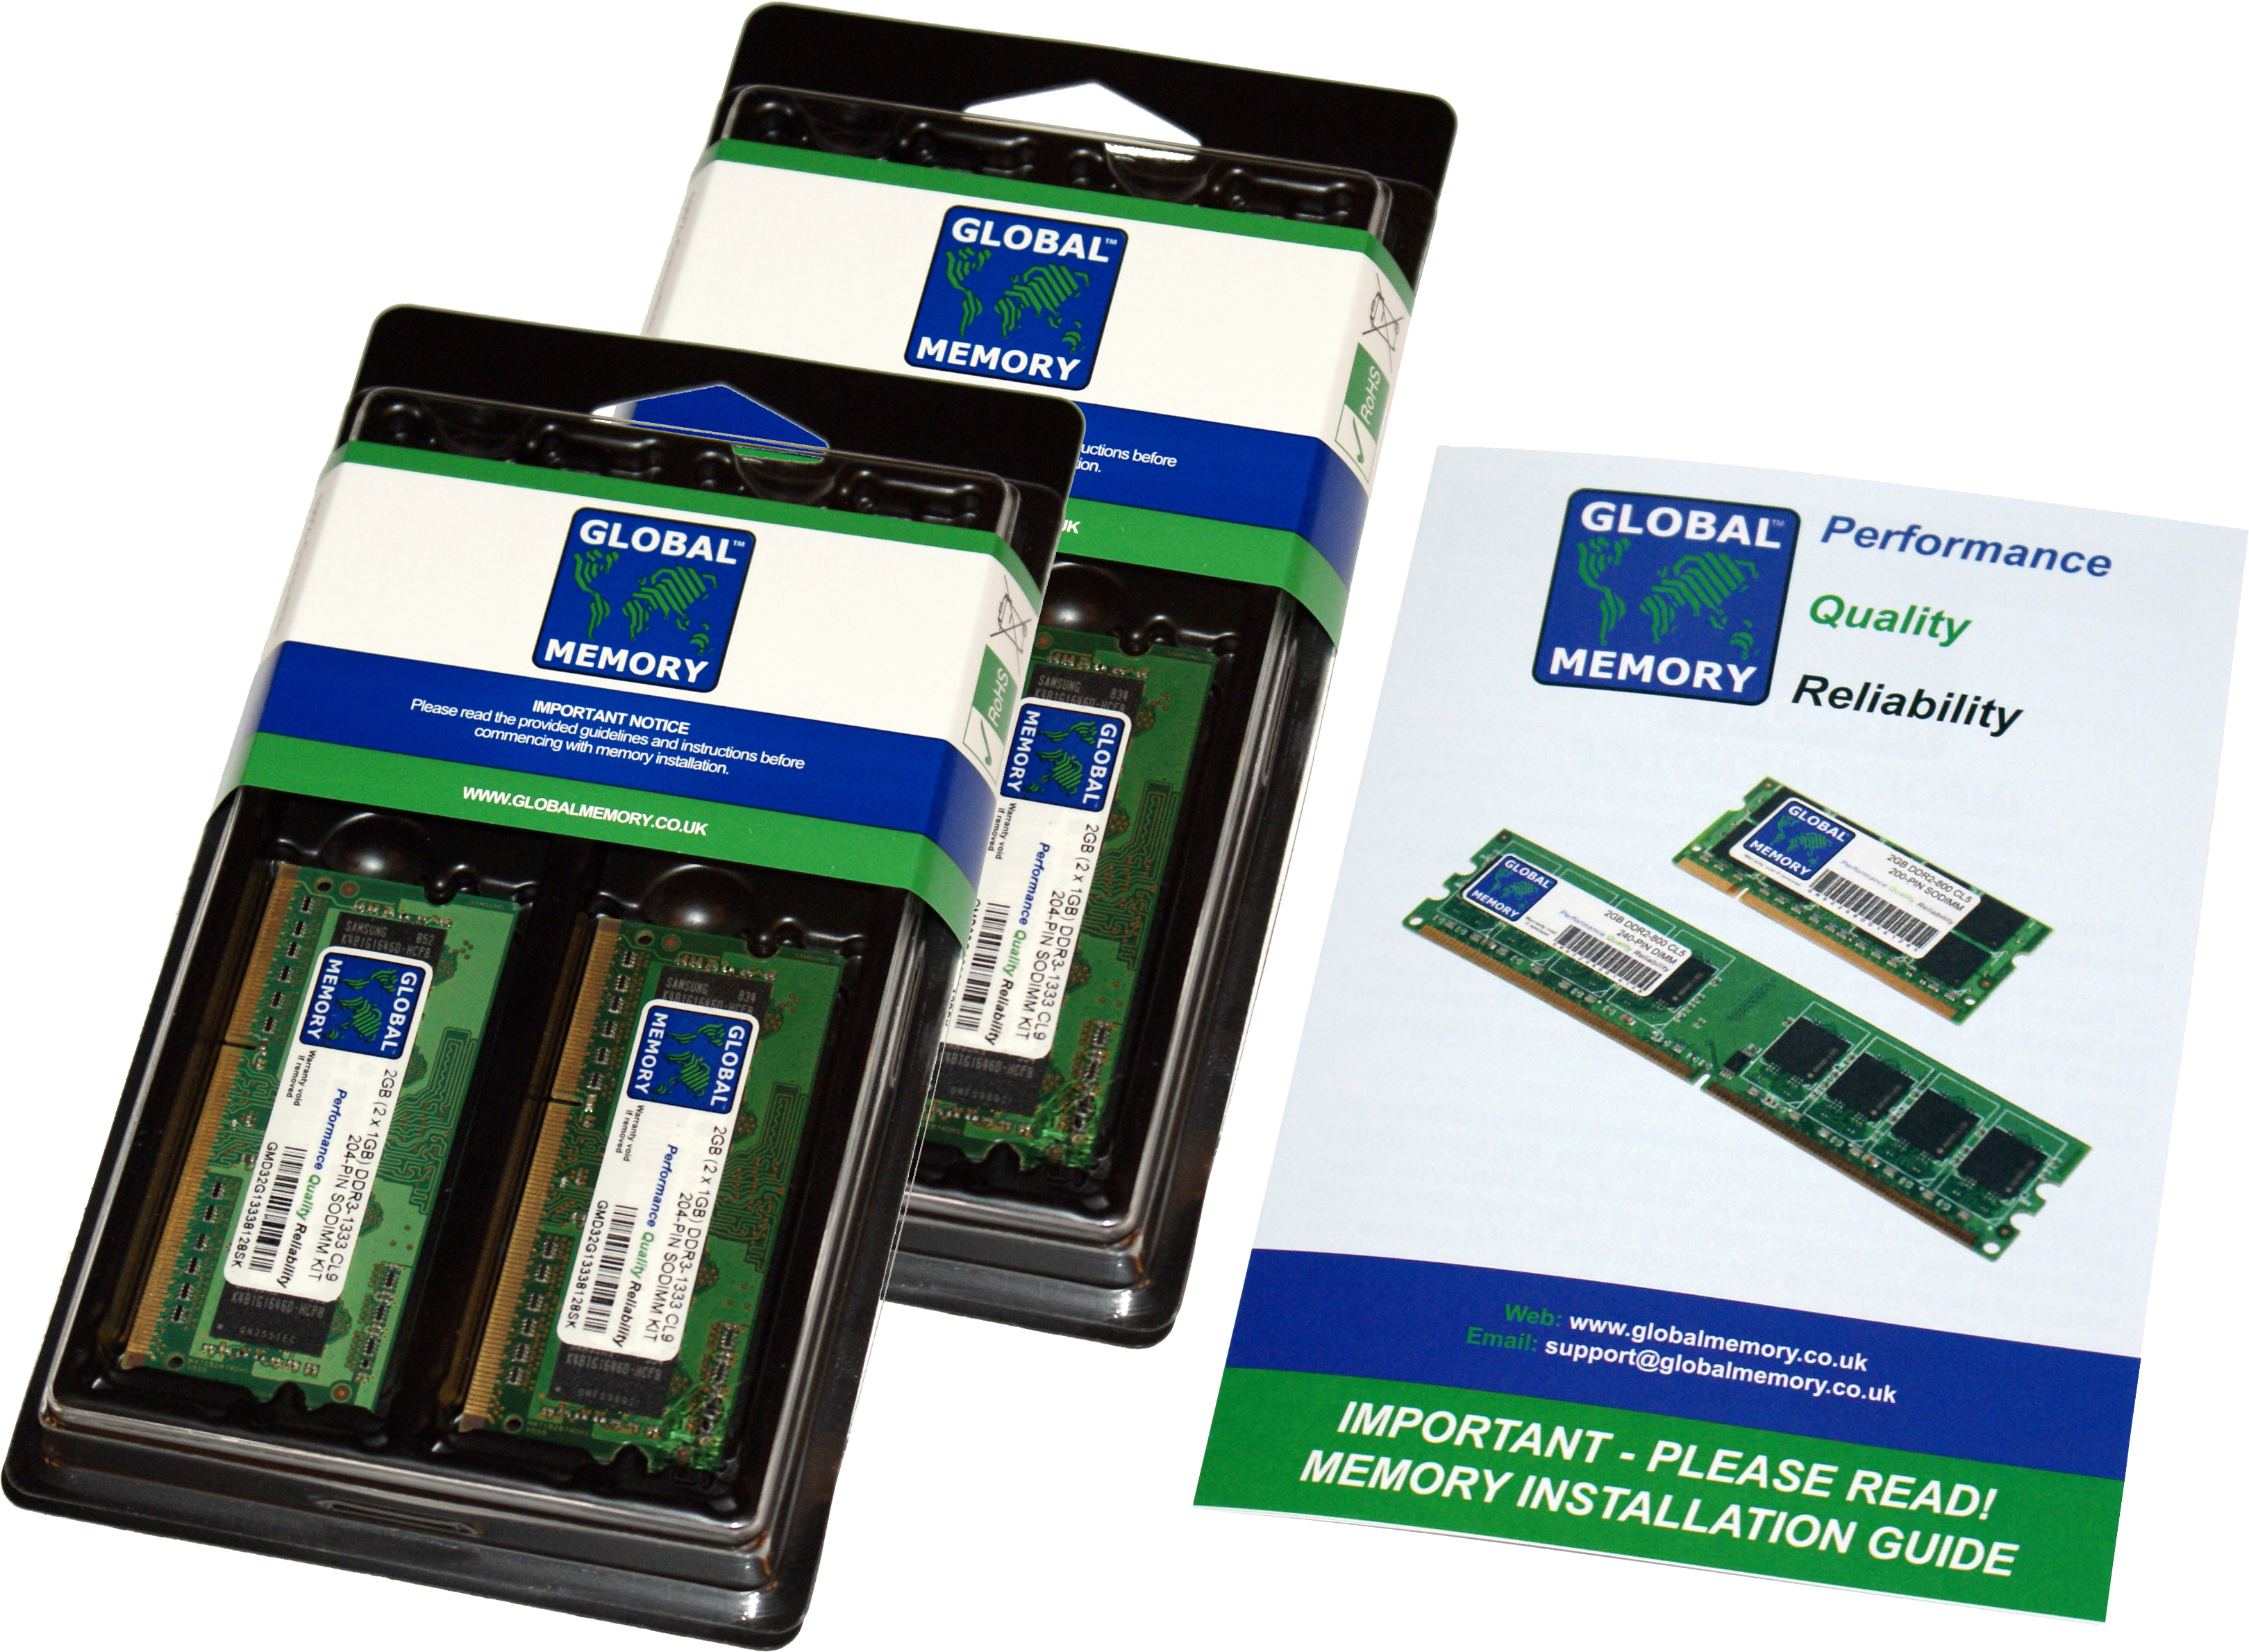 16GB (4 x 4GB) DDR4 2400MHz PC4-19200 260-PIN SODIMM MEMORY RAM KIT FOR DELL LAPTOPS/NOTEBOOKS